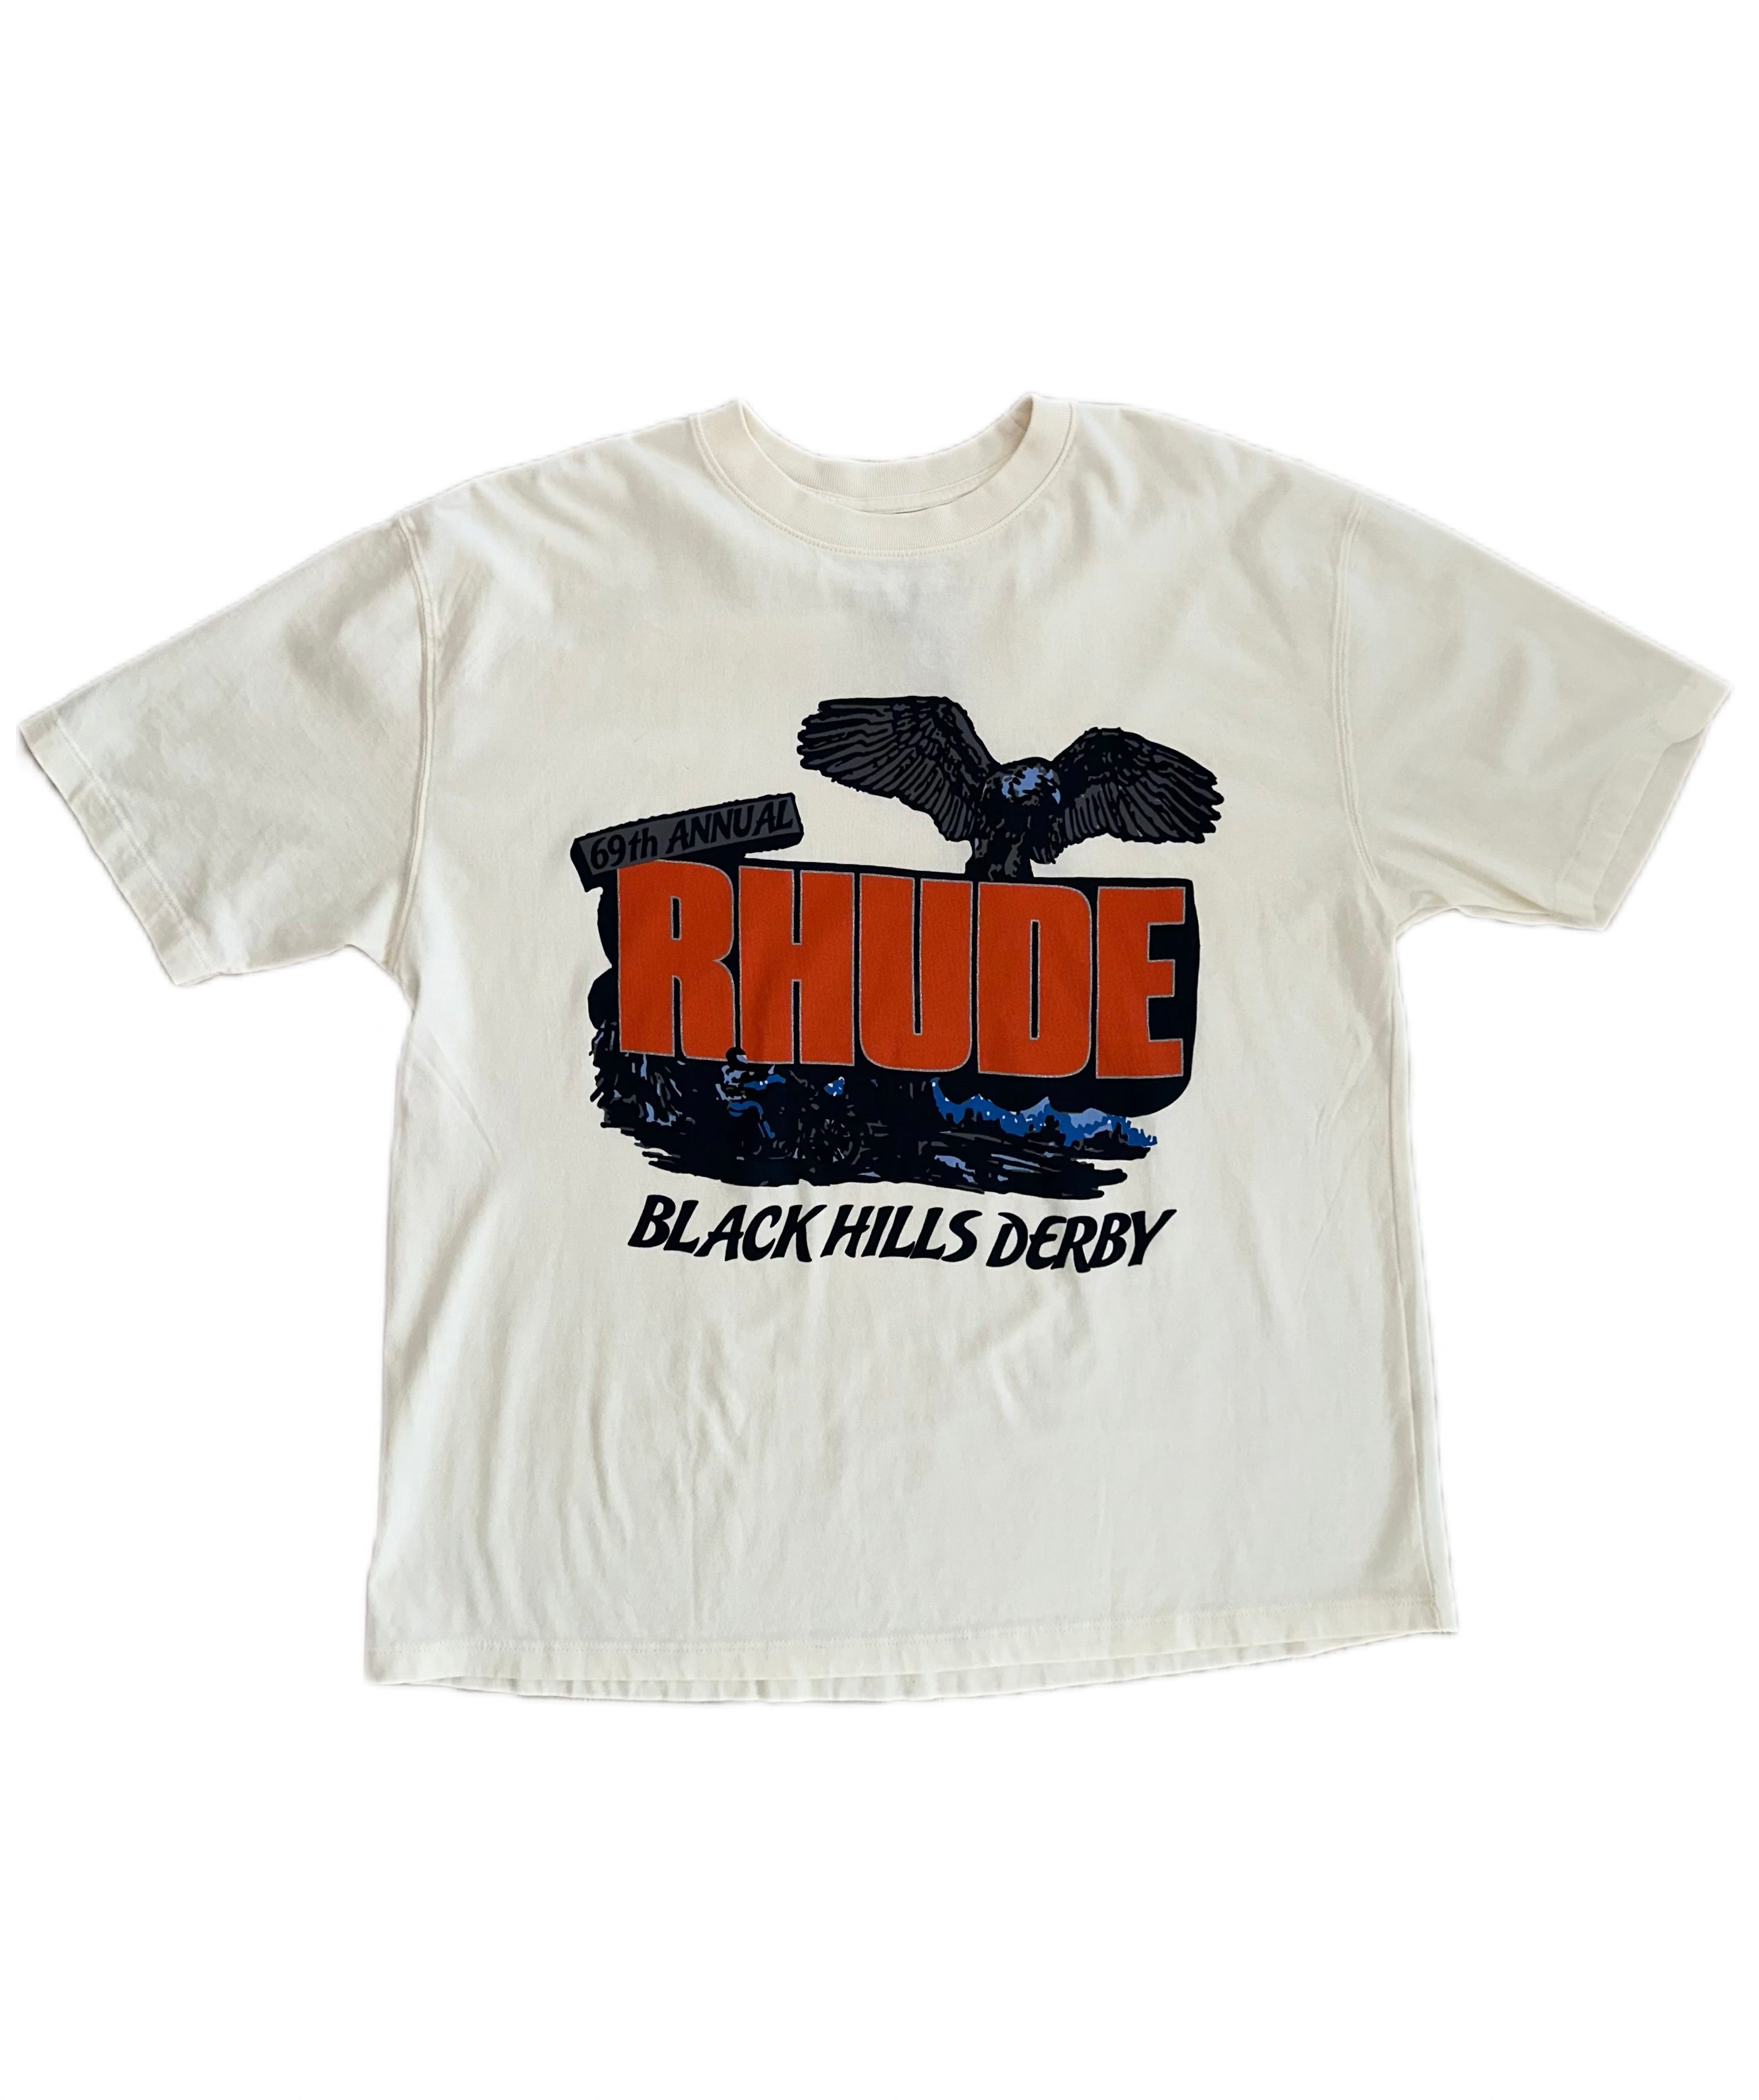 Rhude Off-Road Rally T-shirt (White/Orange)